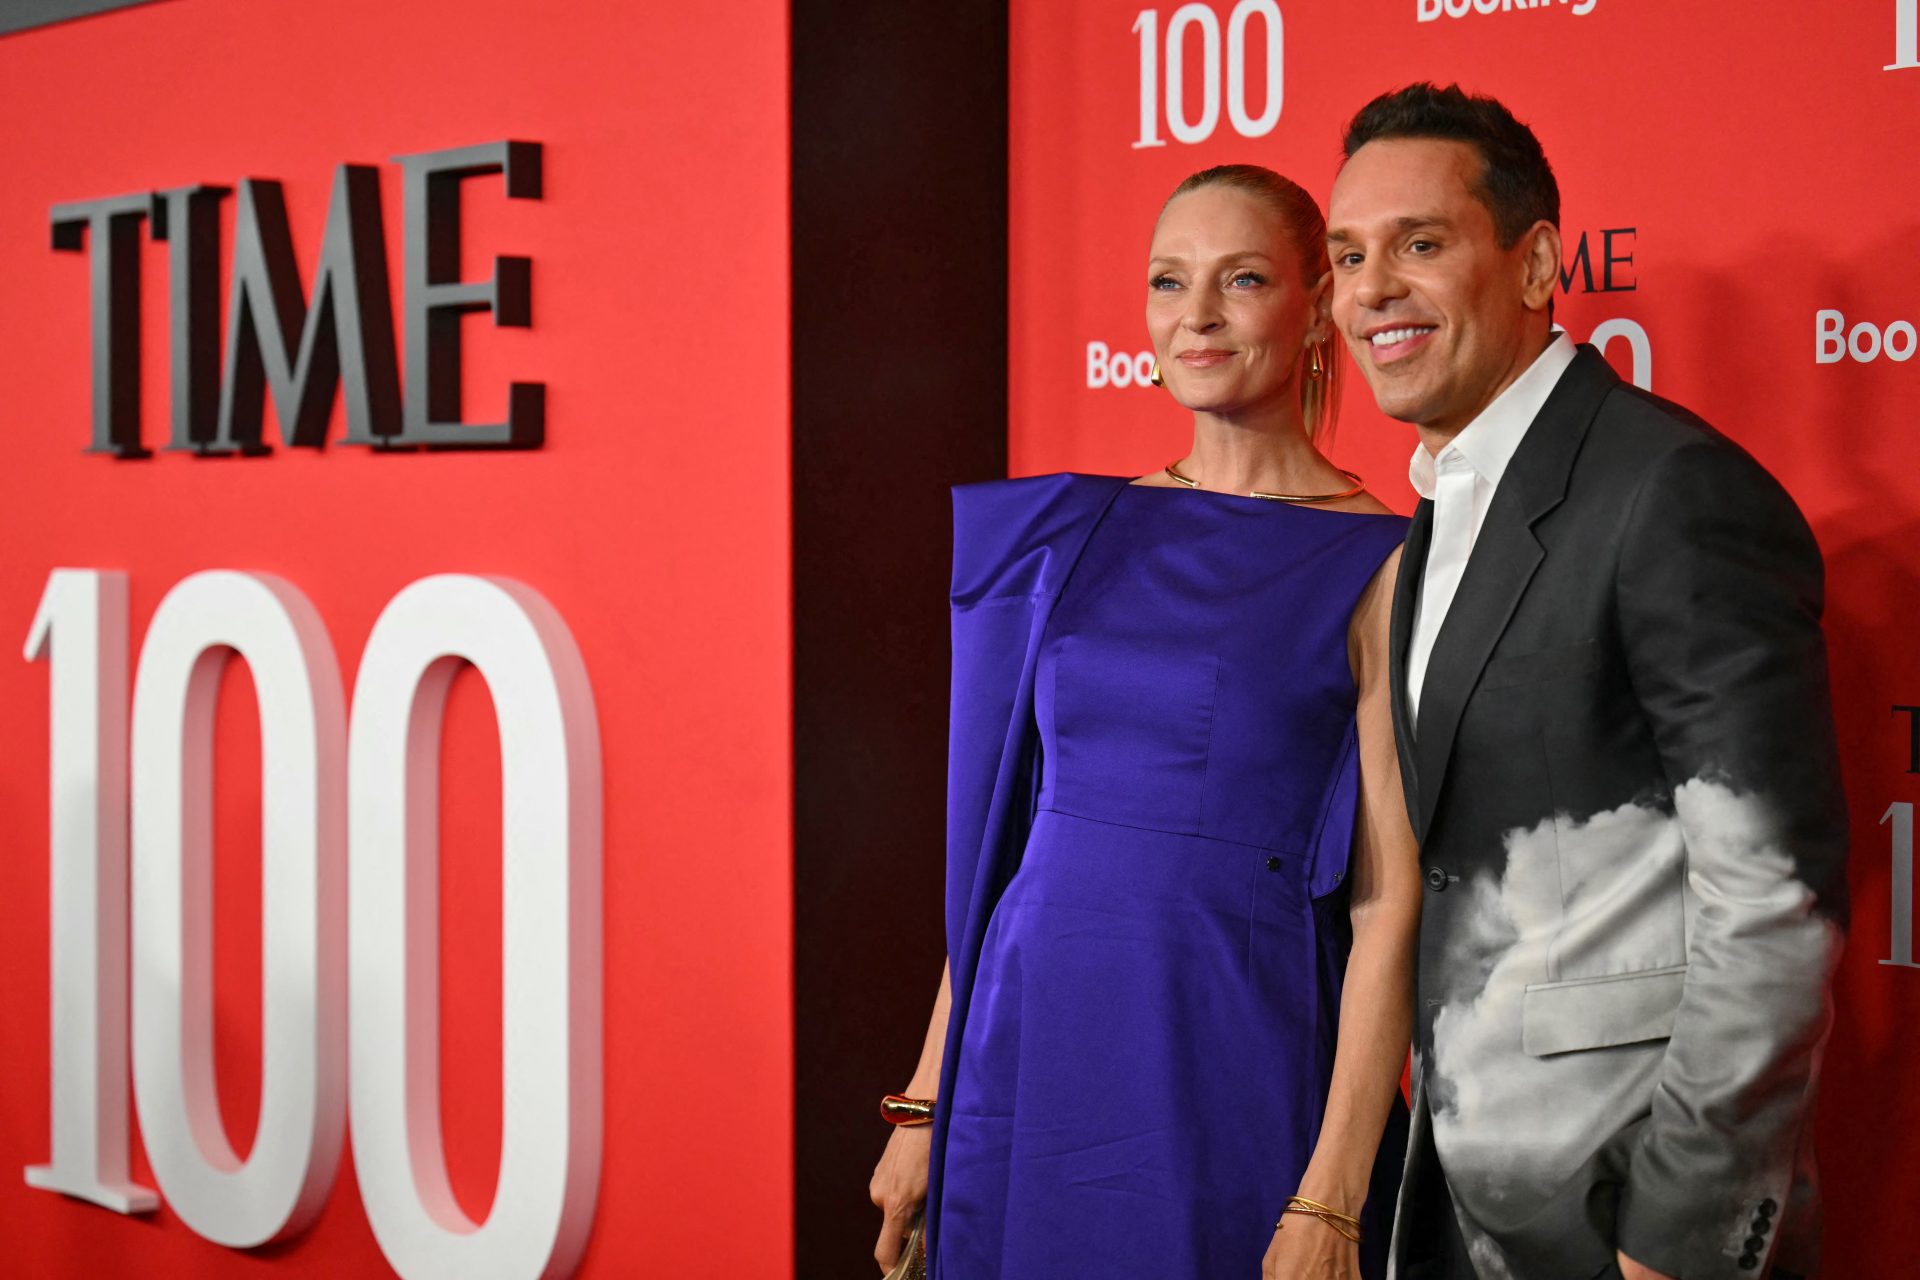 Christian Angermayer y Uma Thurman en la fiesta TIME 100